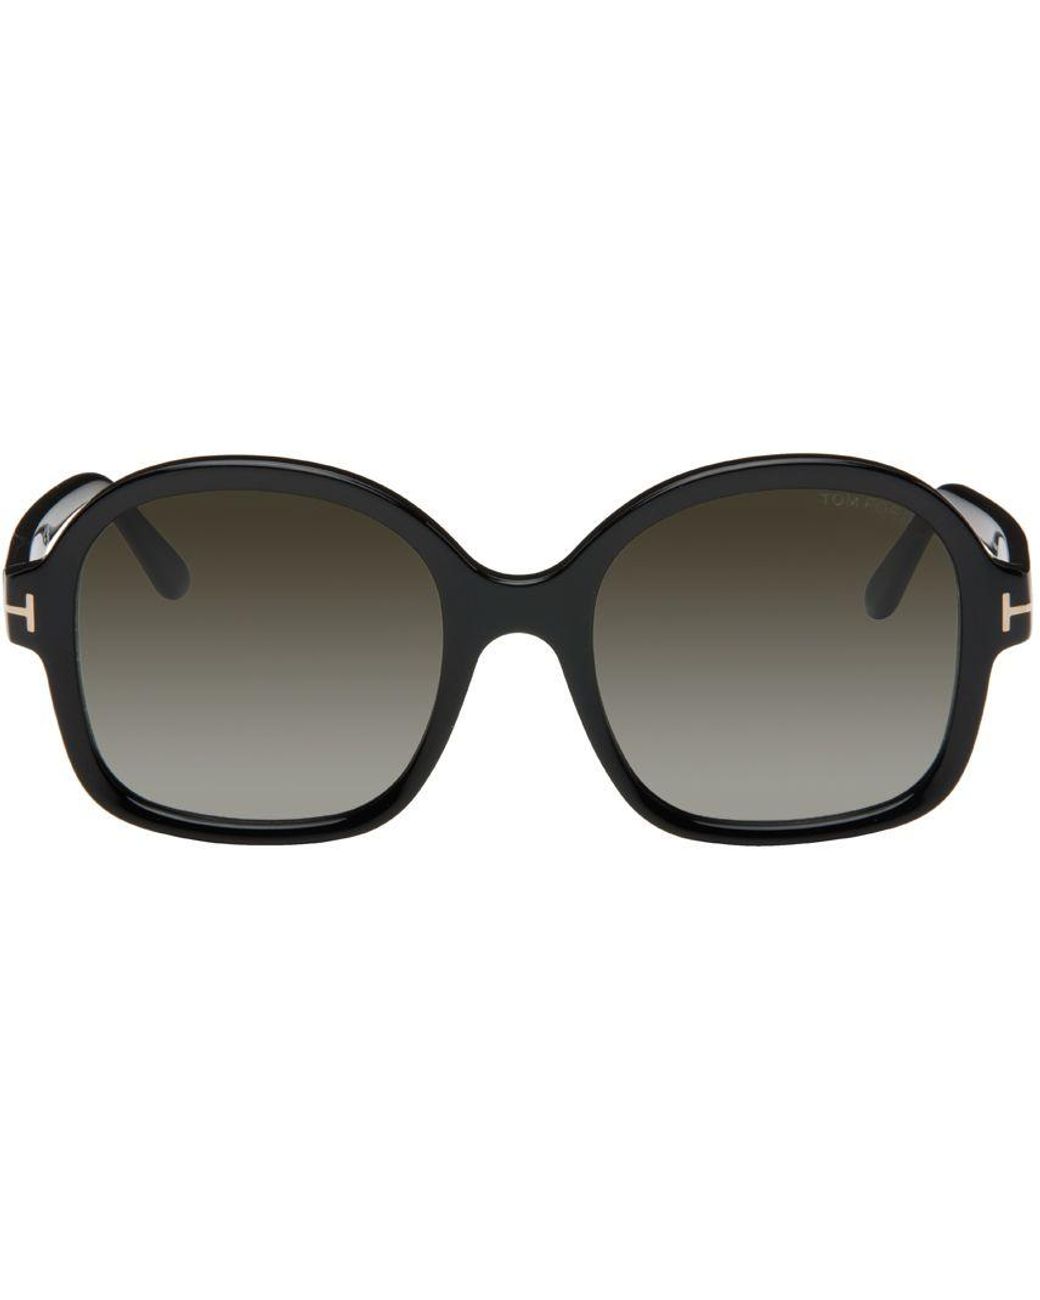 Tom Ford Black Hanley Sunglasses | Lyst